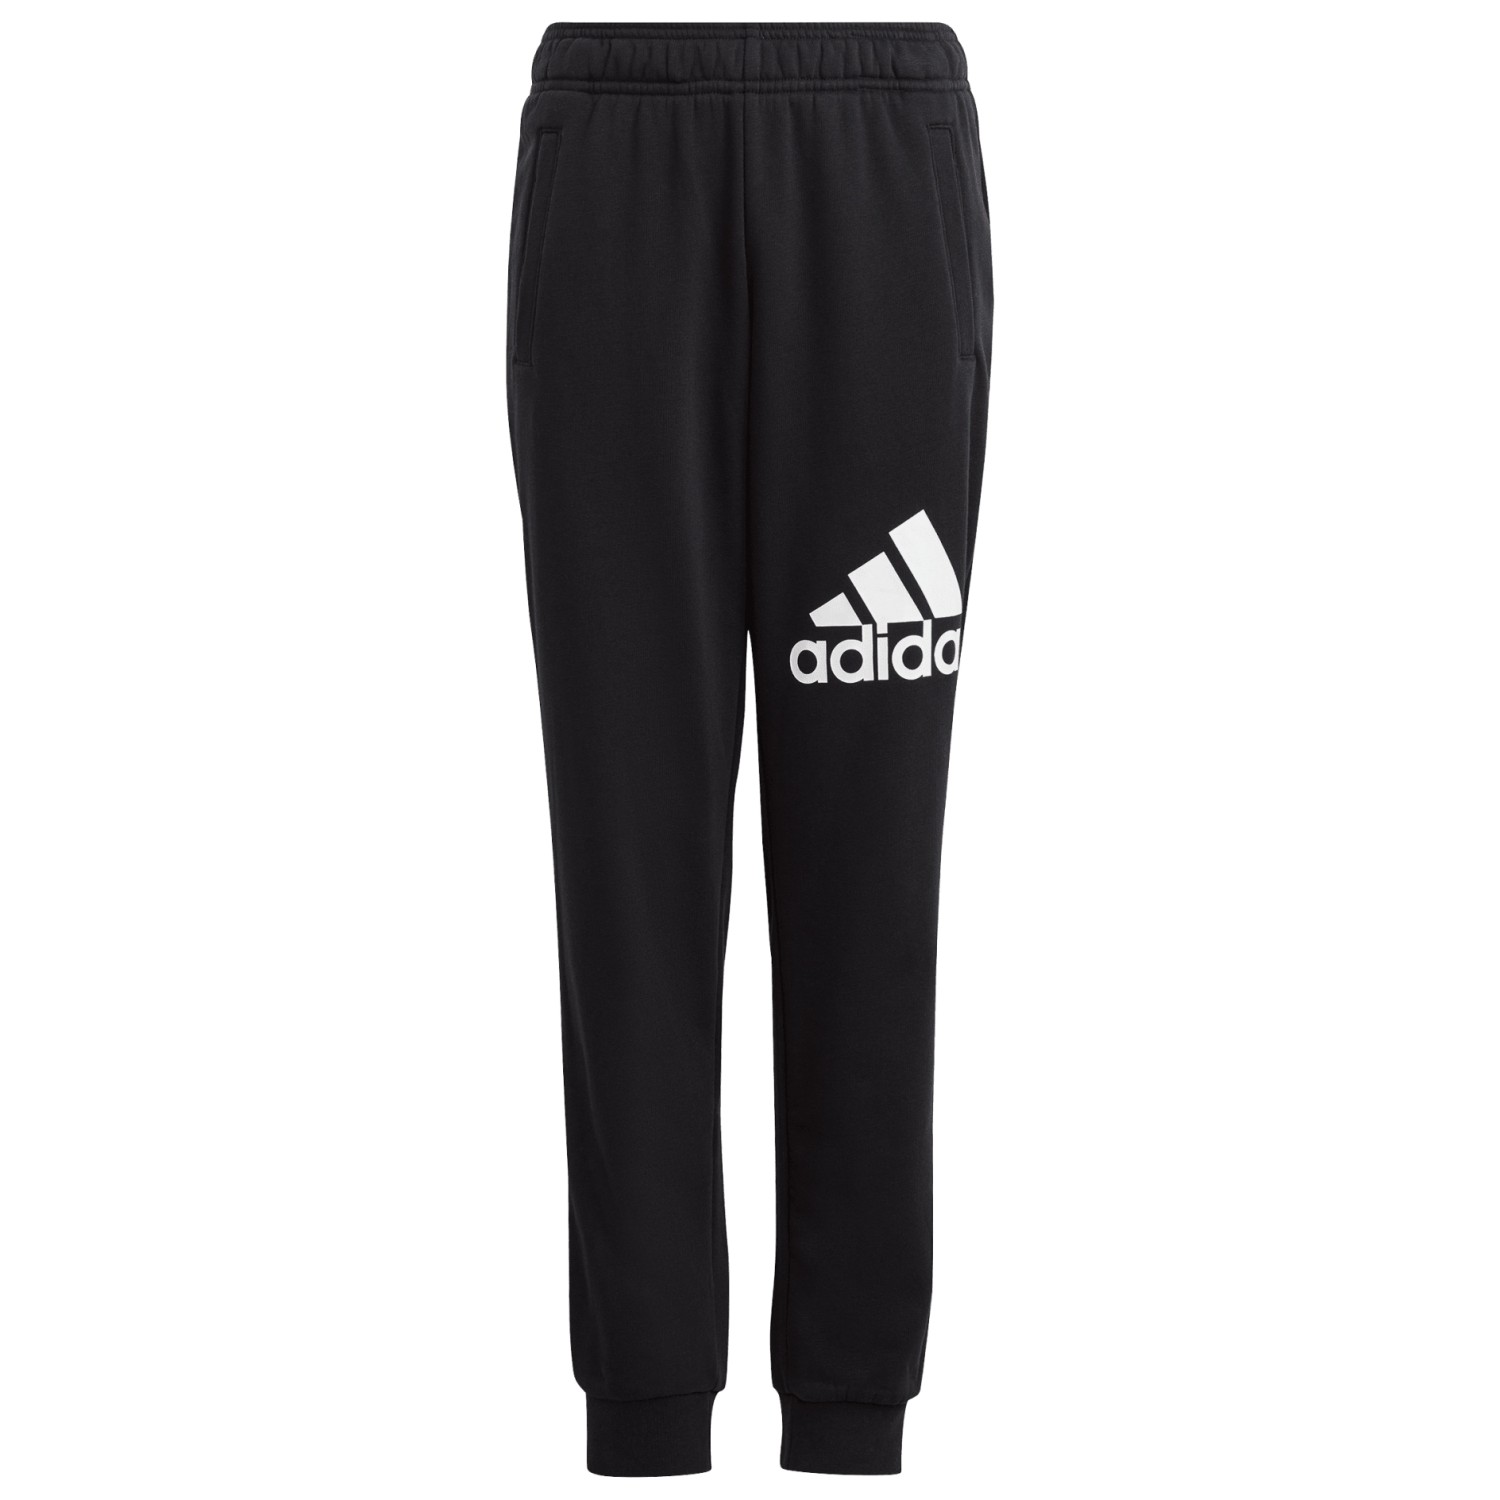 Тренировочные брюки Adidas Kid's BL Pant, цвет Black/White брюки муж h67150 adidas tennis pant black white размер m